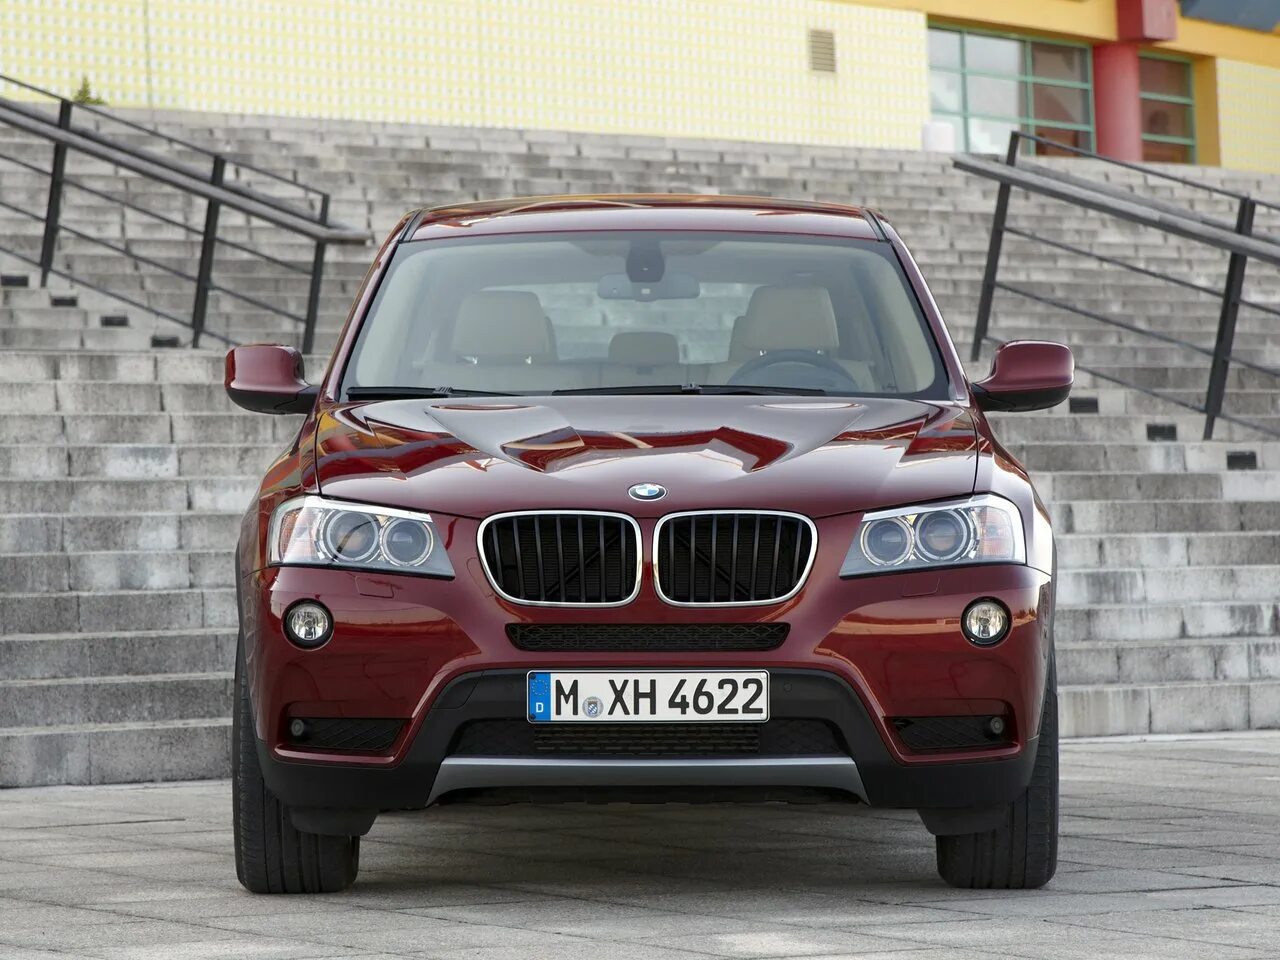 BMW x3 f25. BMW x3 II (f25). BMW x3 красная. BMW x3 xdrive20d. Бмв х3 полный